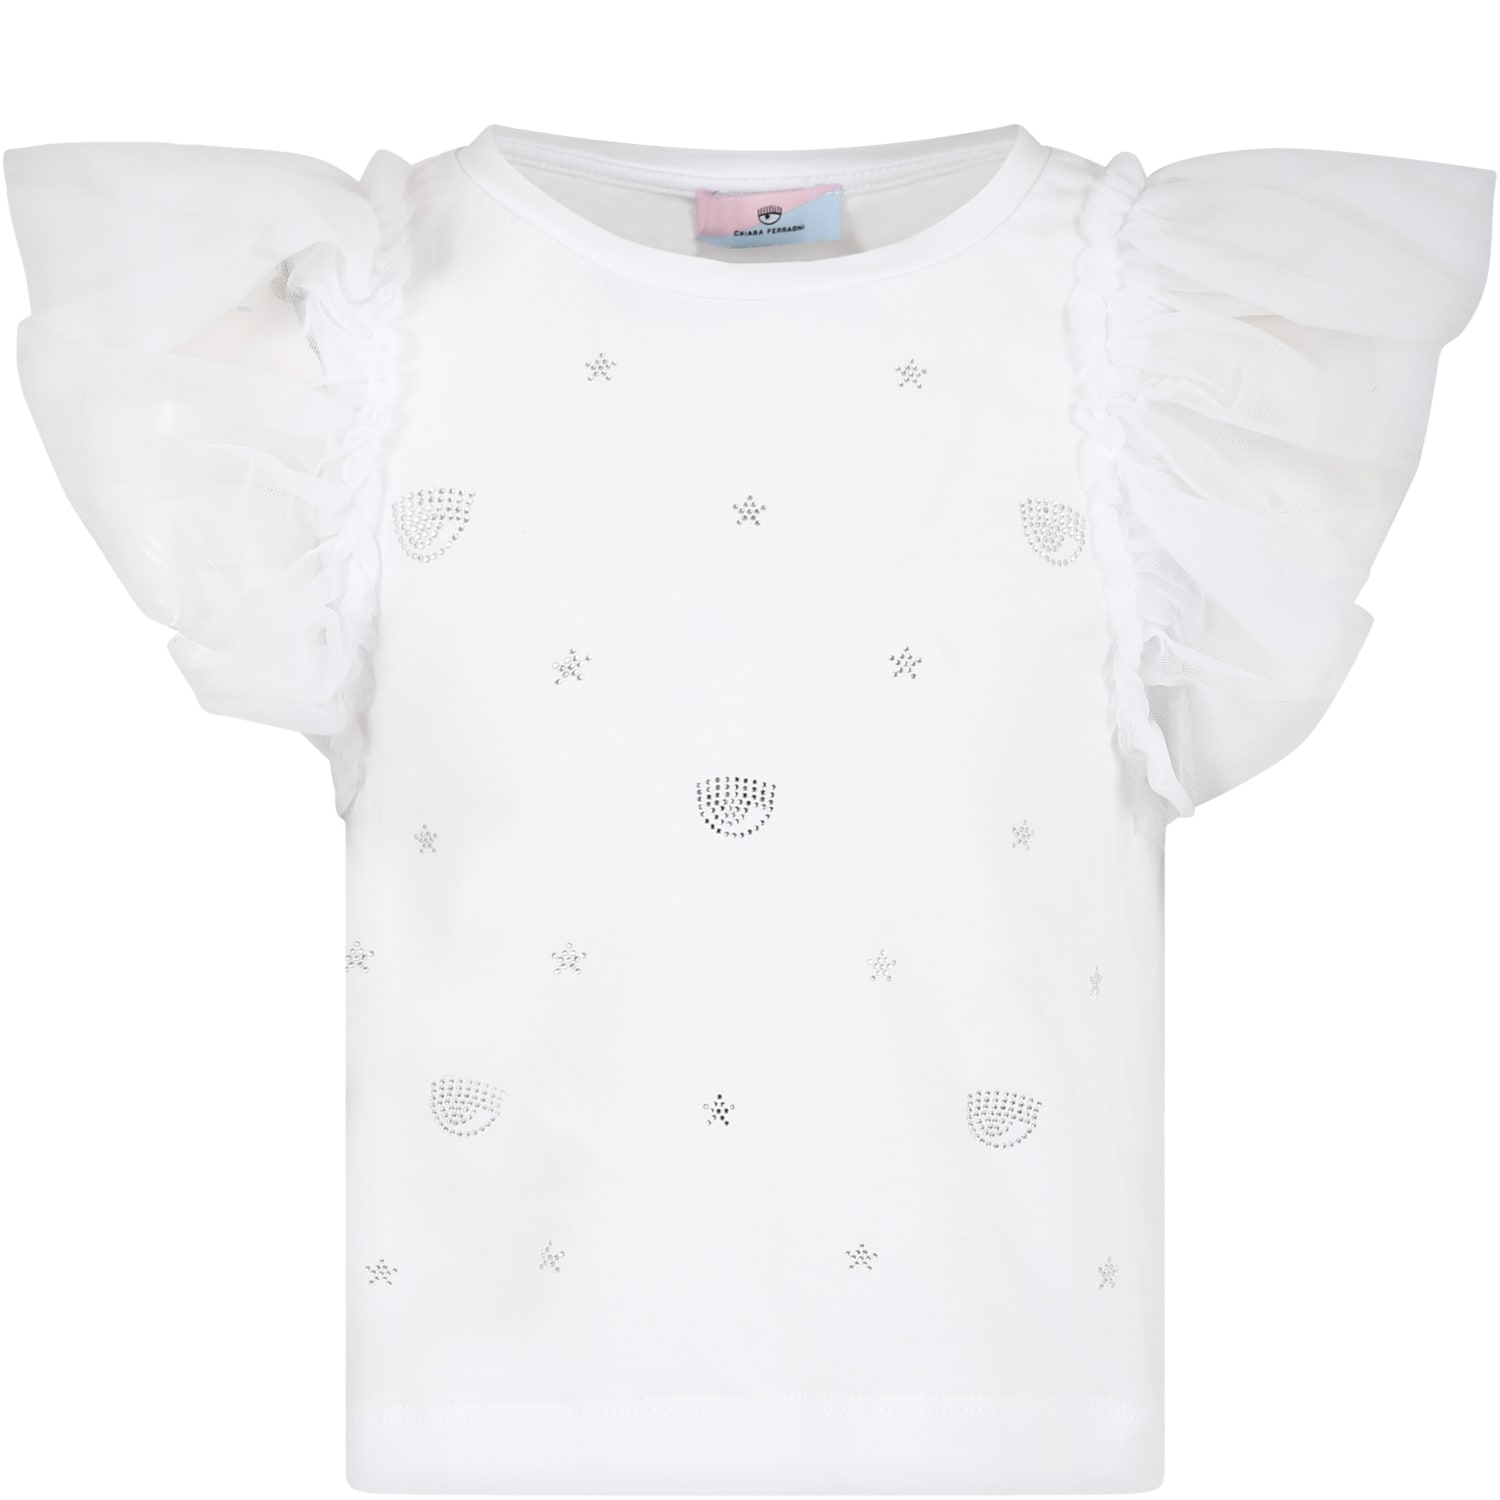 Chiara Ferragni Kids' White T-shirt For Girl With Iconic Winks